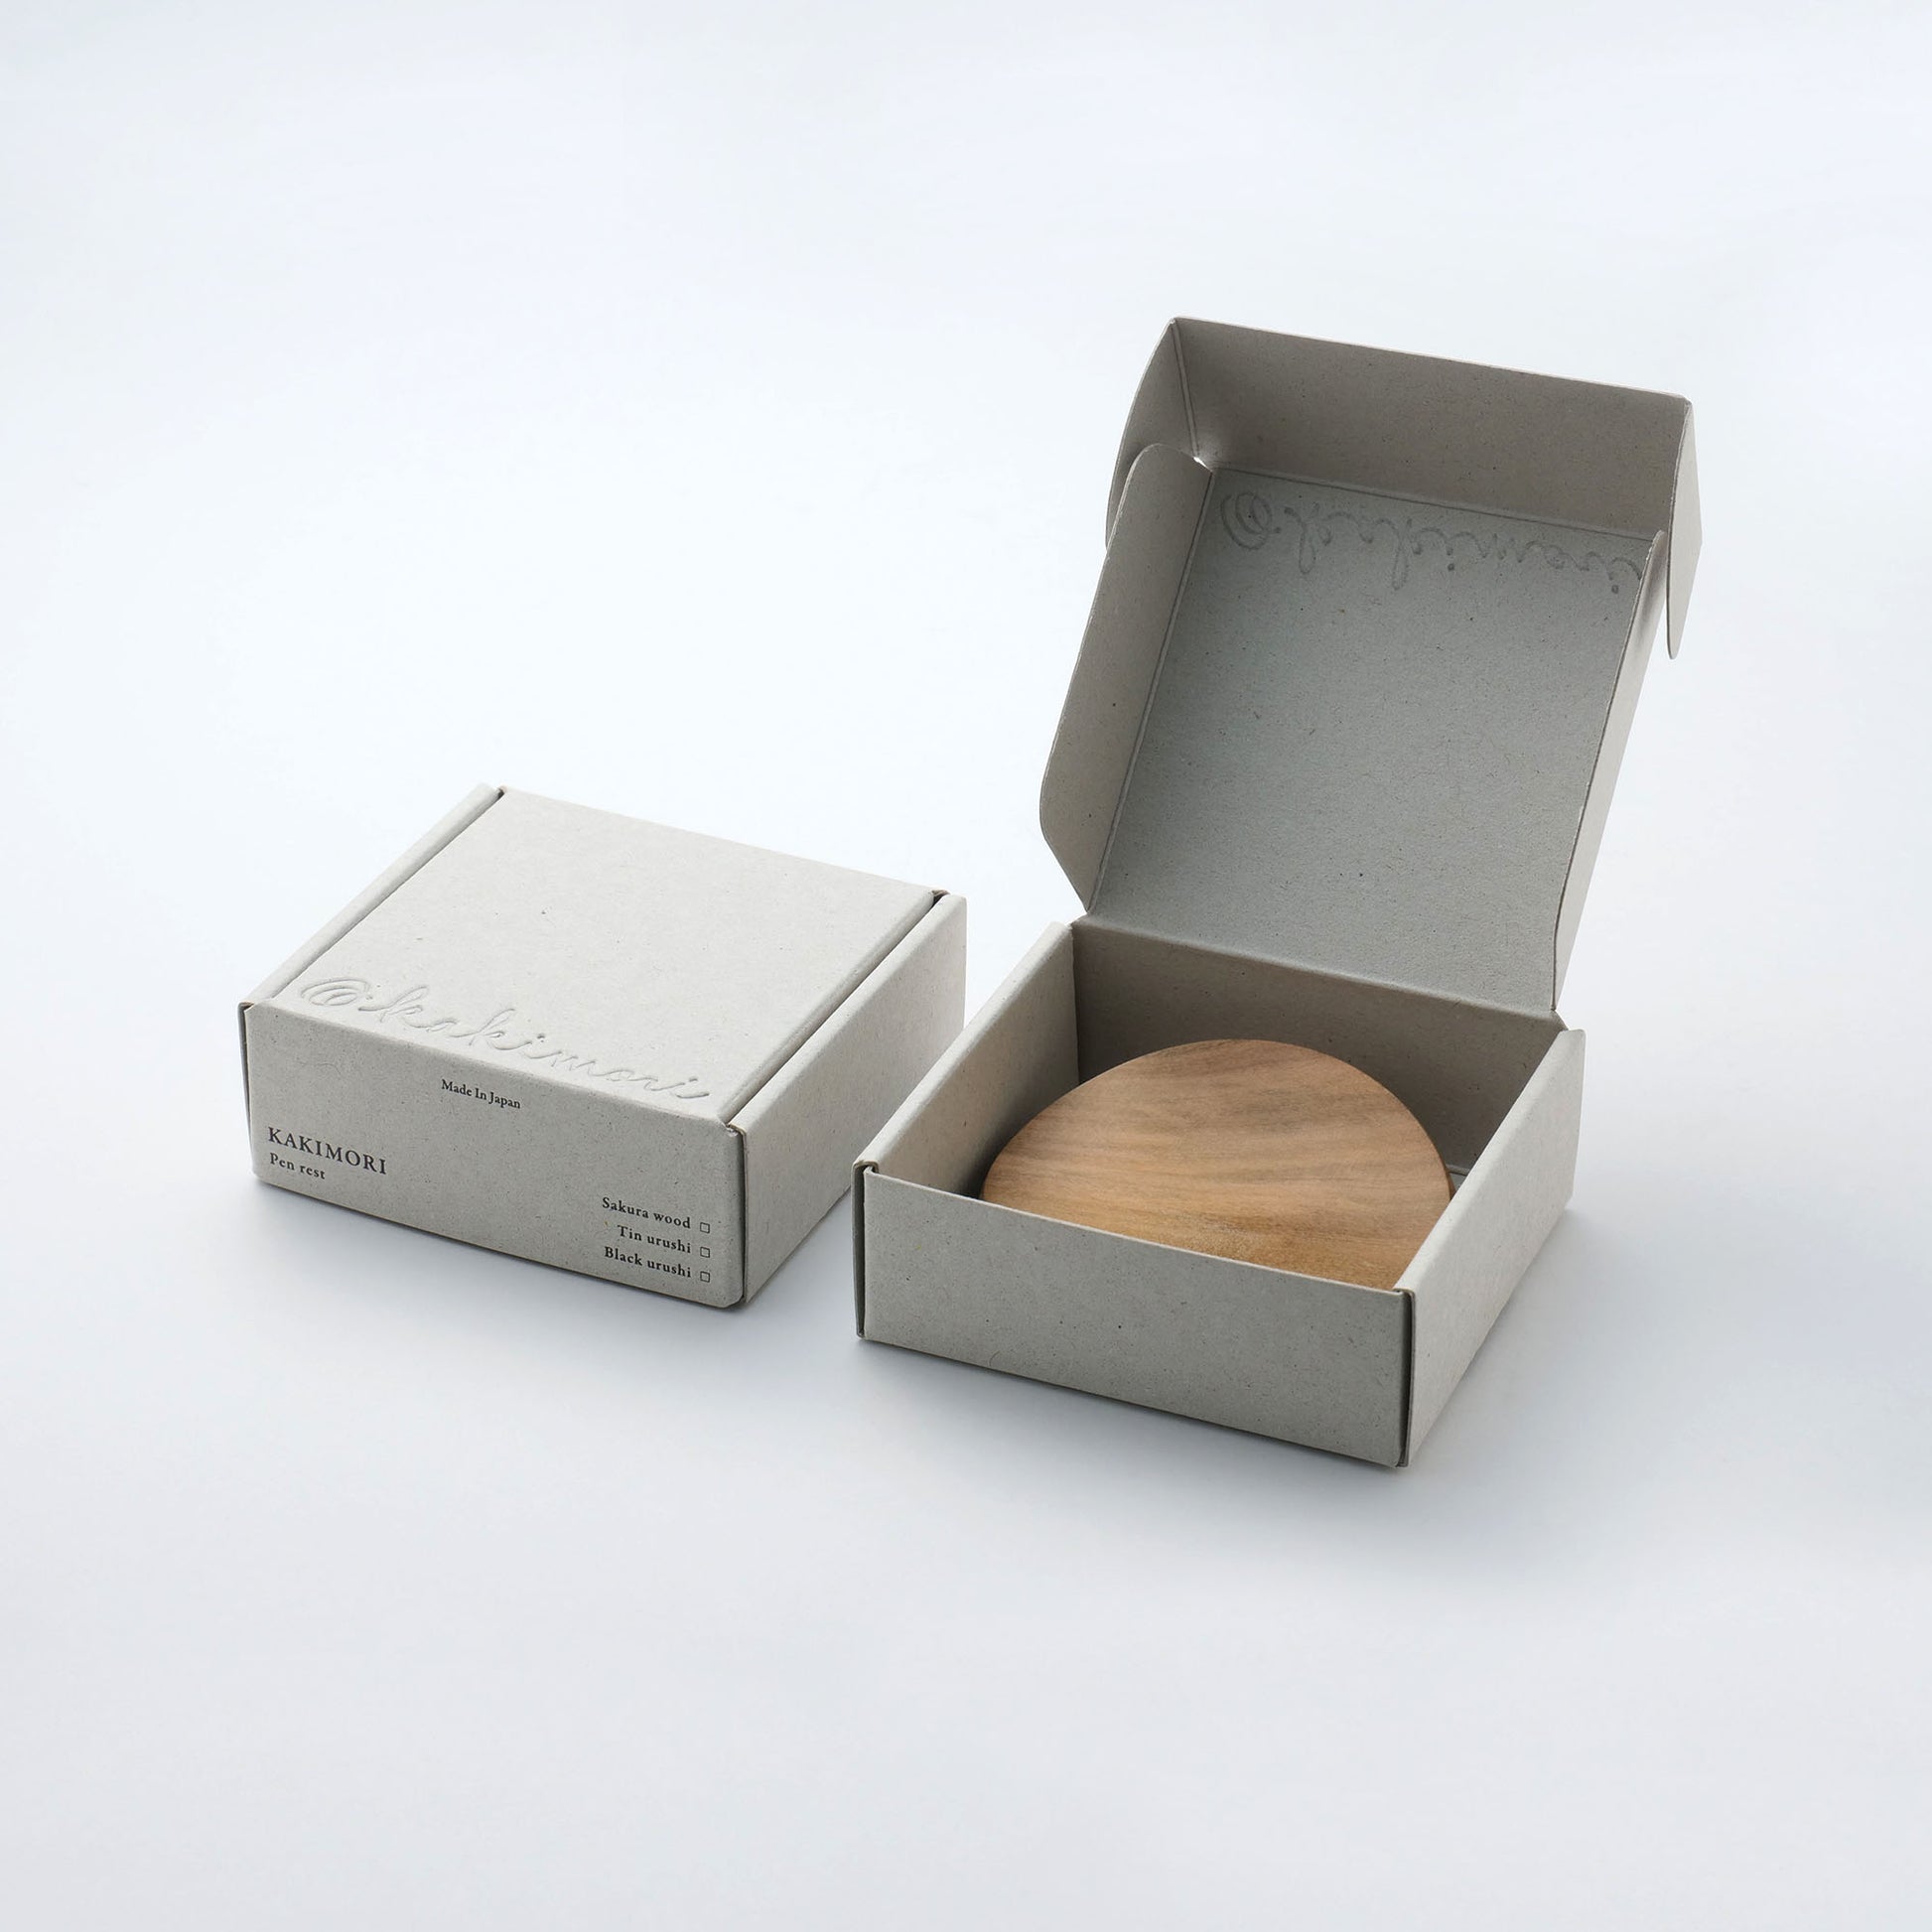 Kakimori Sakura Wood Pen Rest. Dip Pen Rest made in Japan in box